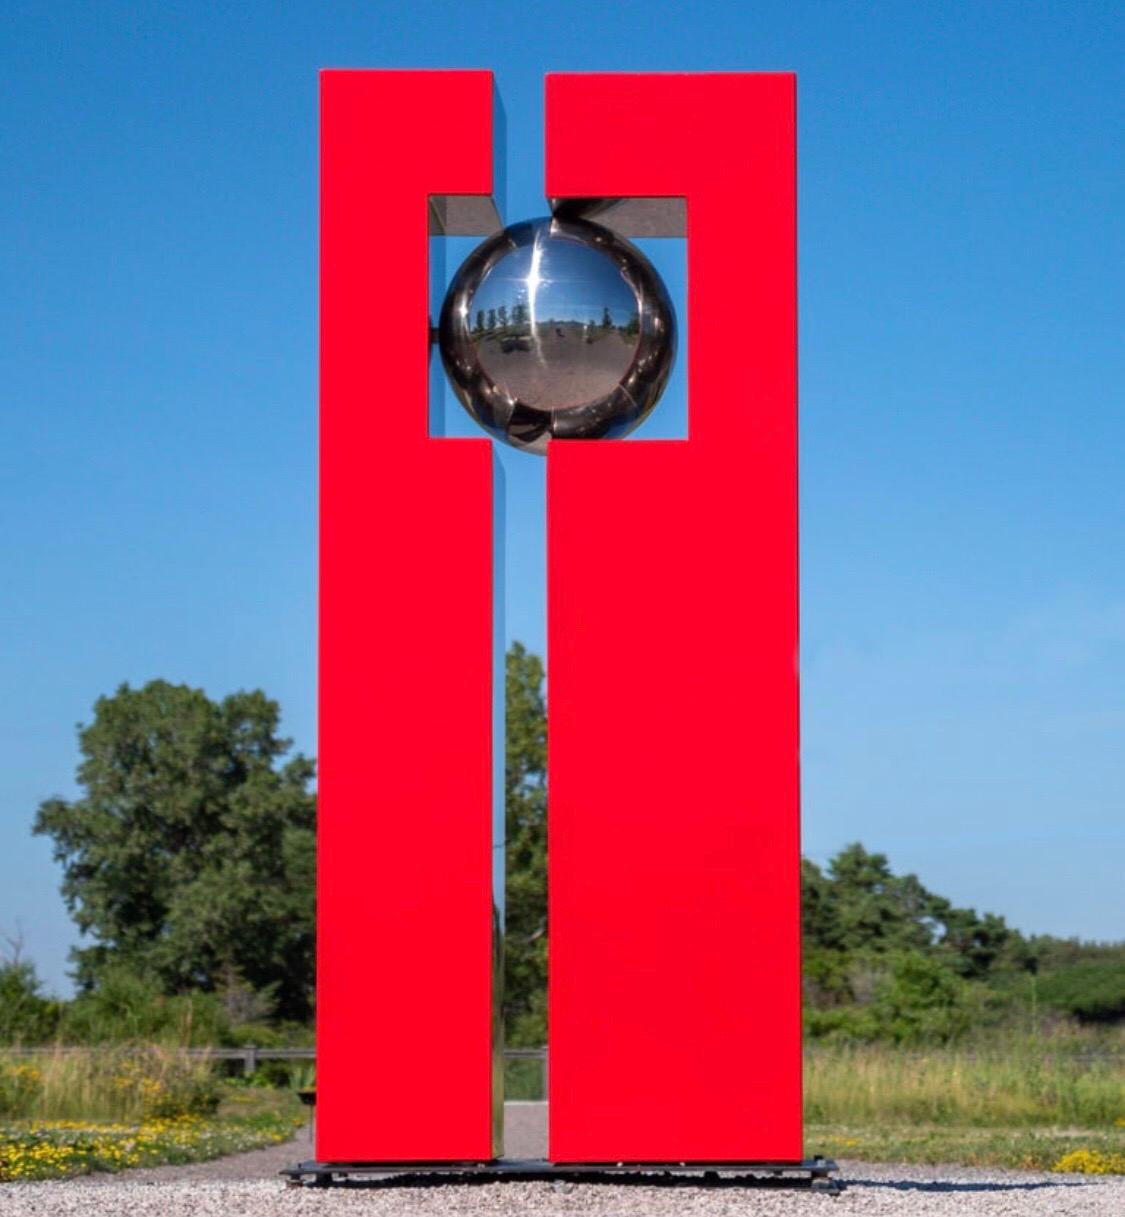 Philippe Pallafray Abstract Sculpture - Mecanique Celeste 9/10 - tall, geometric, modern, outdoor steel sculpture